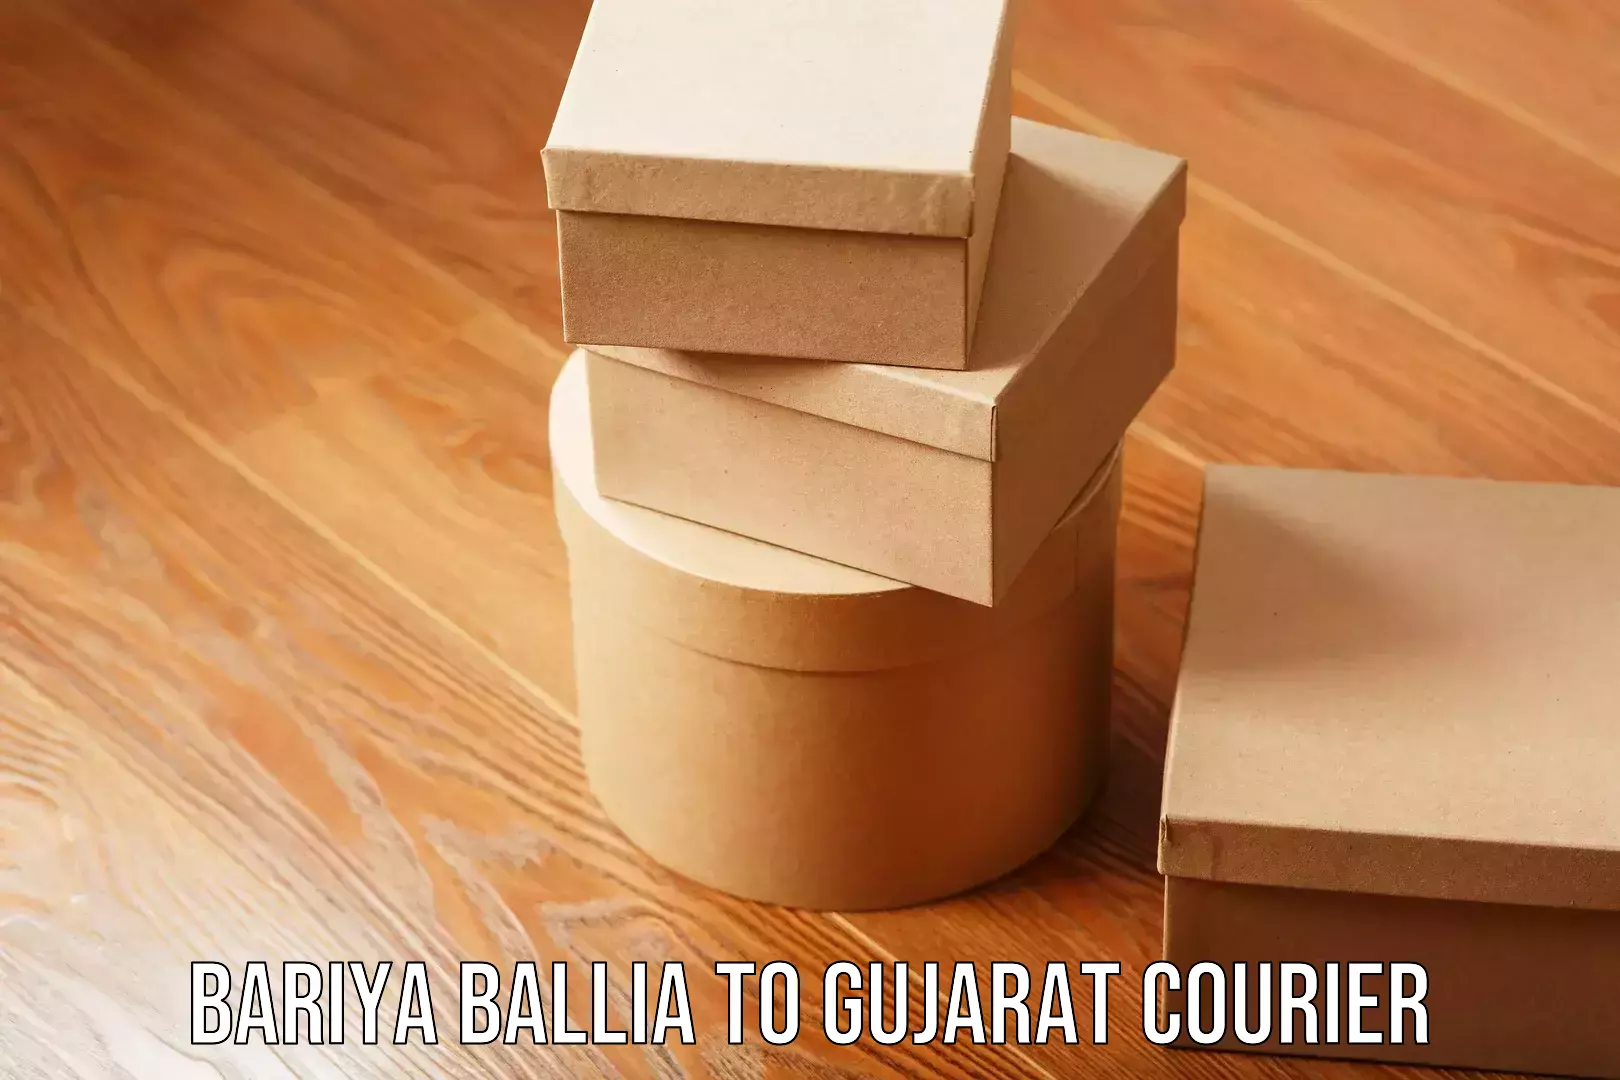 Express delivery solutions Bariya Ballia to Gujarat